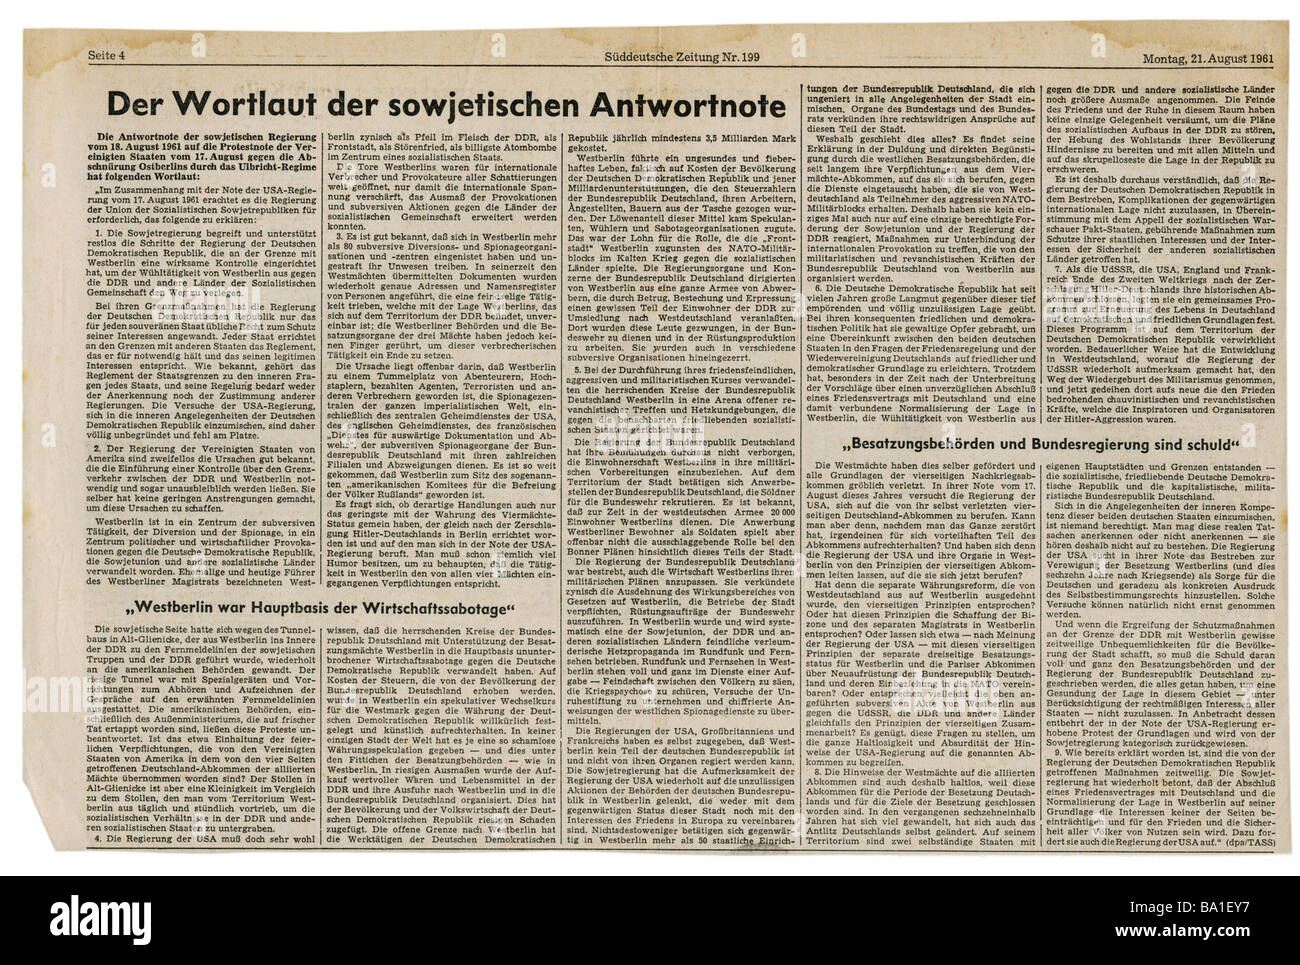 press/media, magazines, 'Süddeutsche Zeitung', Munich, 17 volume, number 199, Monday 21.8.1961, article, Soviet answer to Western protests against blockade of West Berlin, Stock Photo